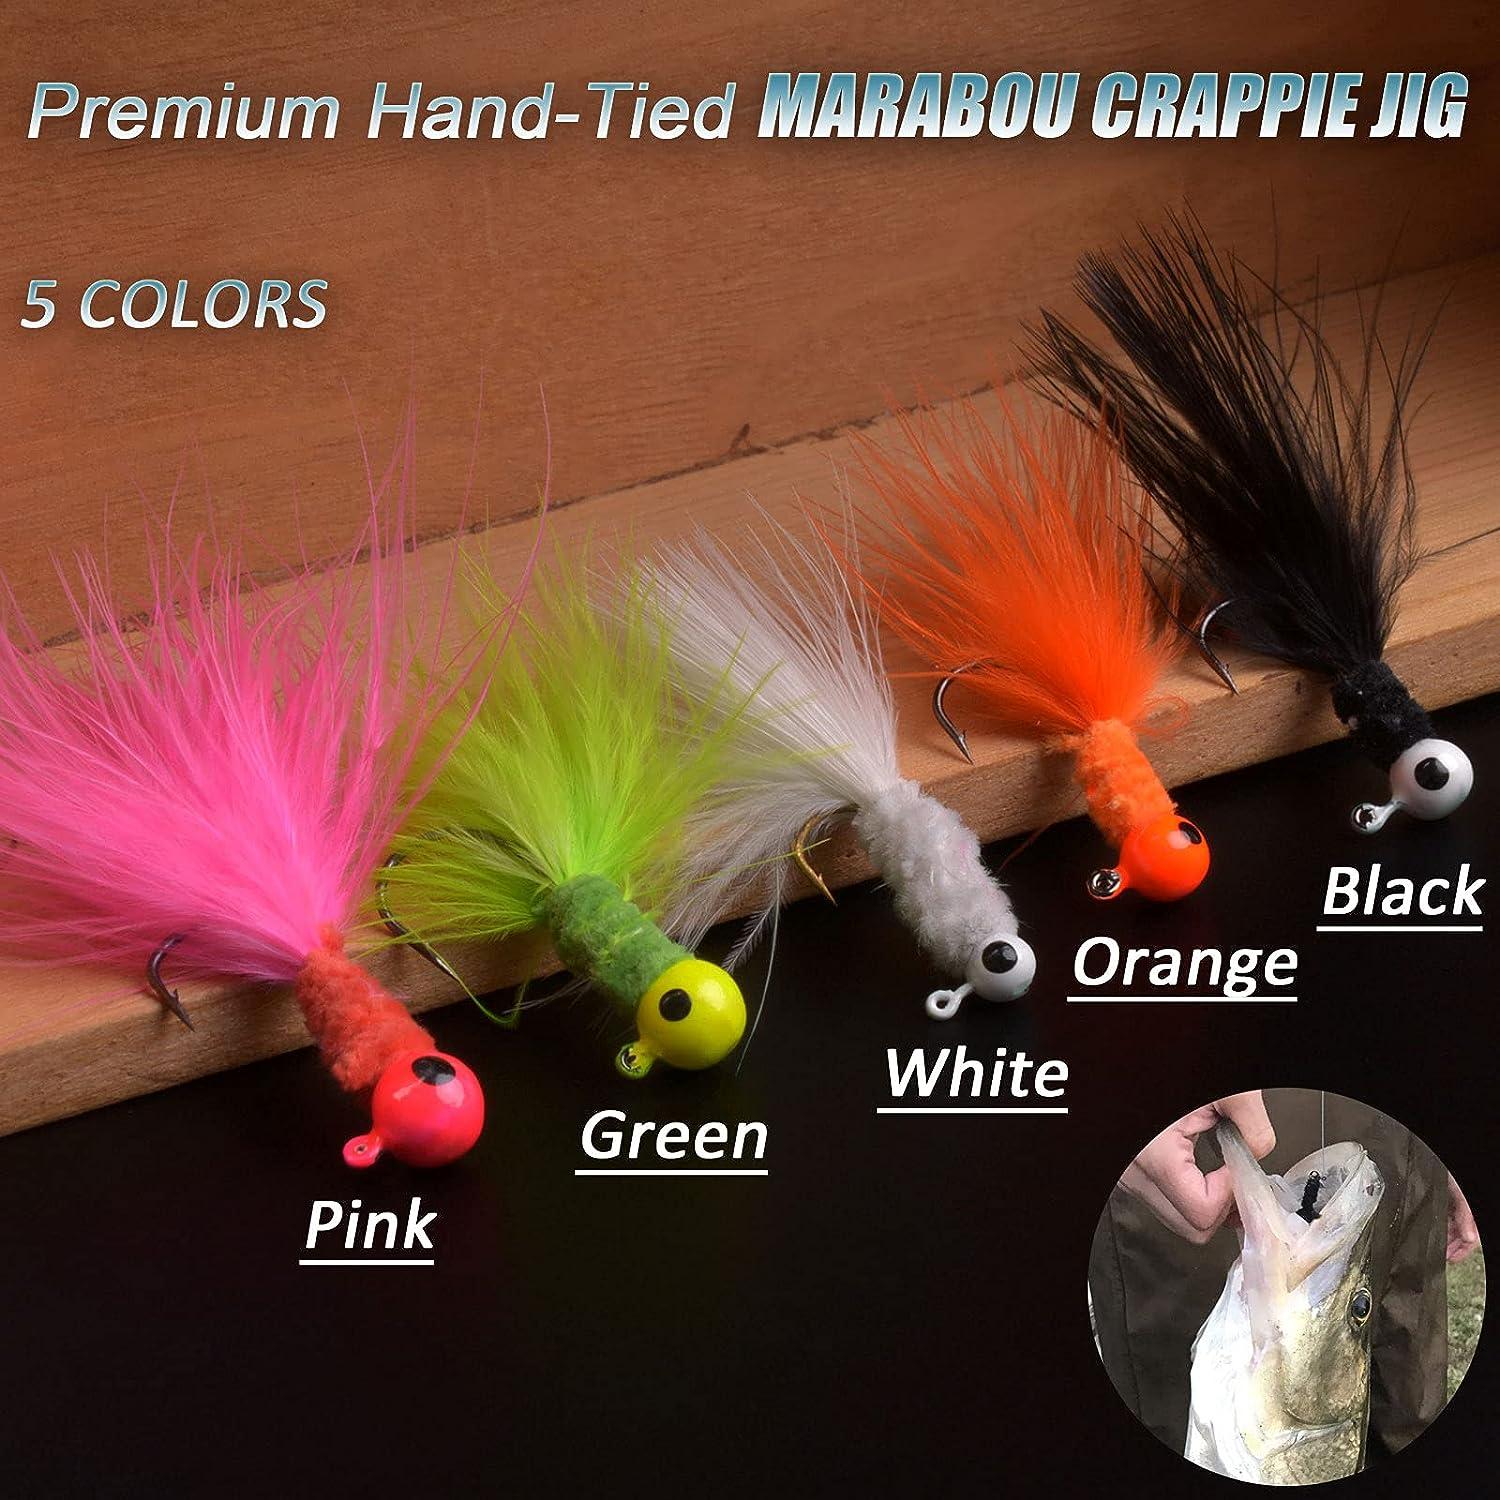 10 Custom Handtied Feather Crappie Jigs Bluegill Trout 1/16oz